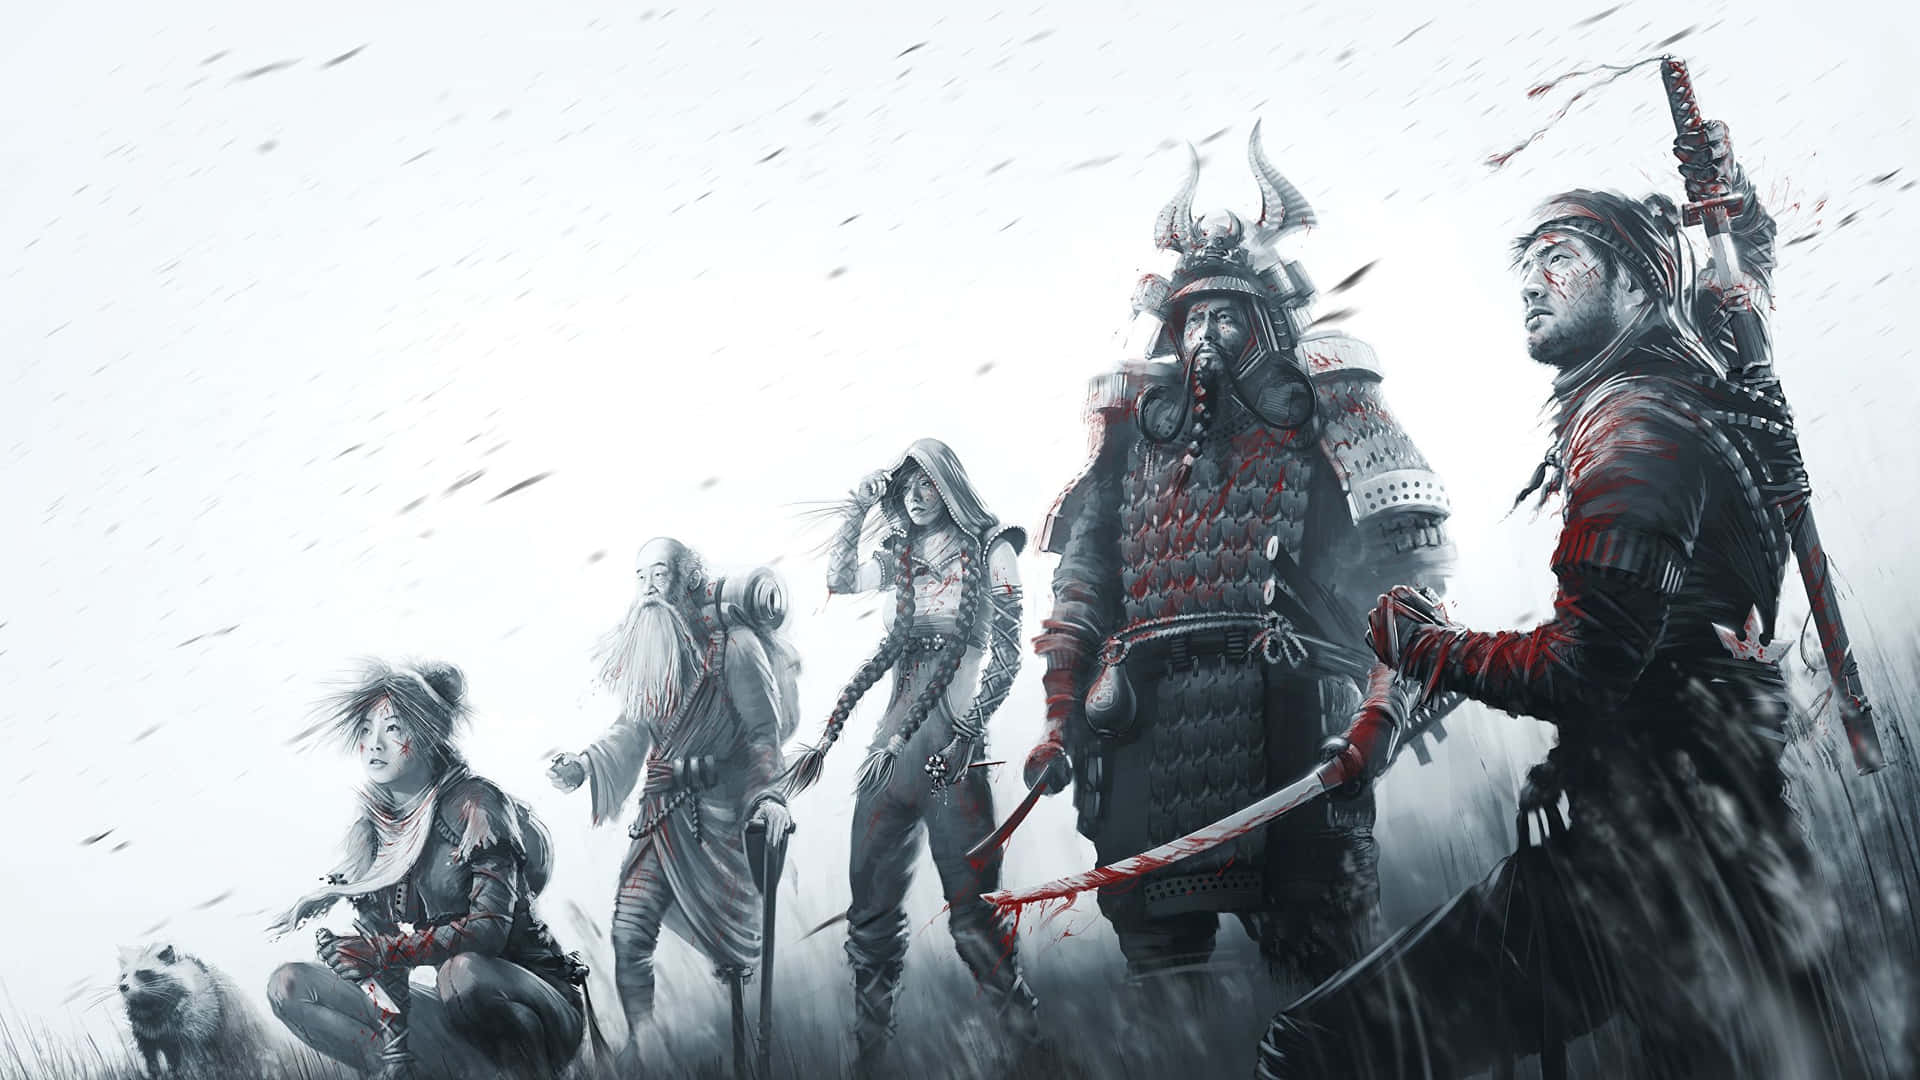 Bold Black and White Samurai in Battle Stance Wallpaper